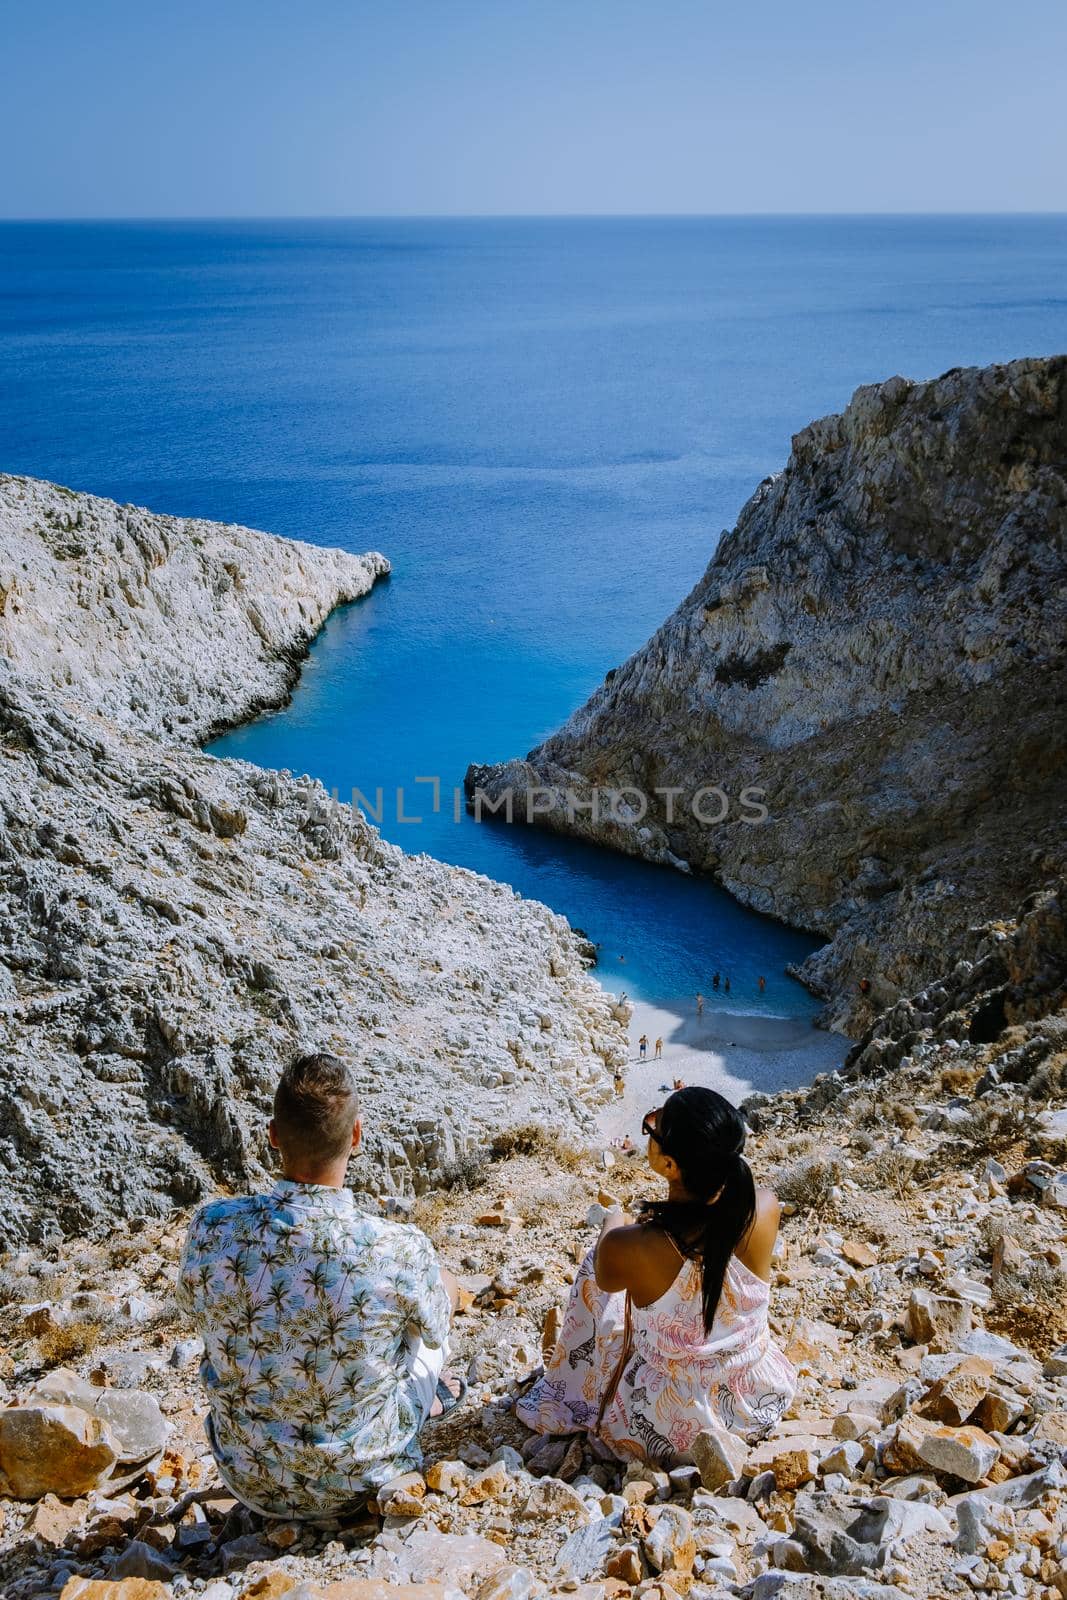 Beautiful beach called Seitan limania on Crete, Greece by fokkebok